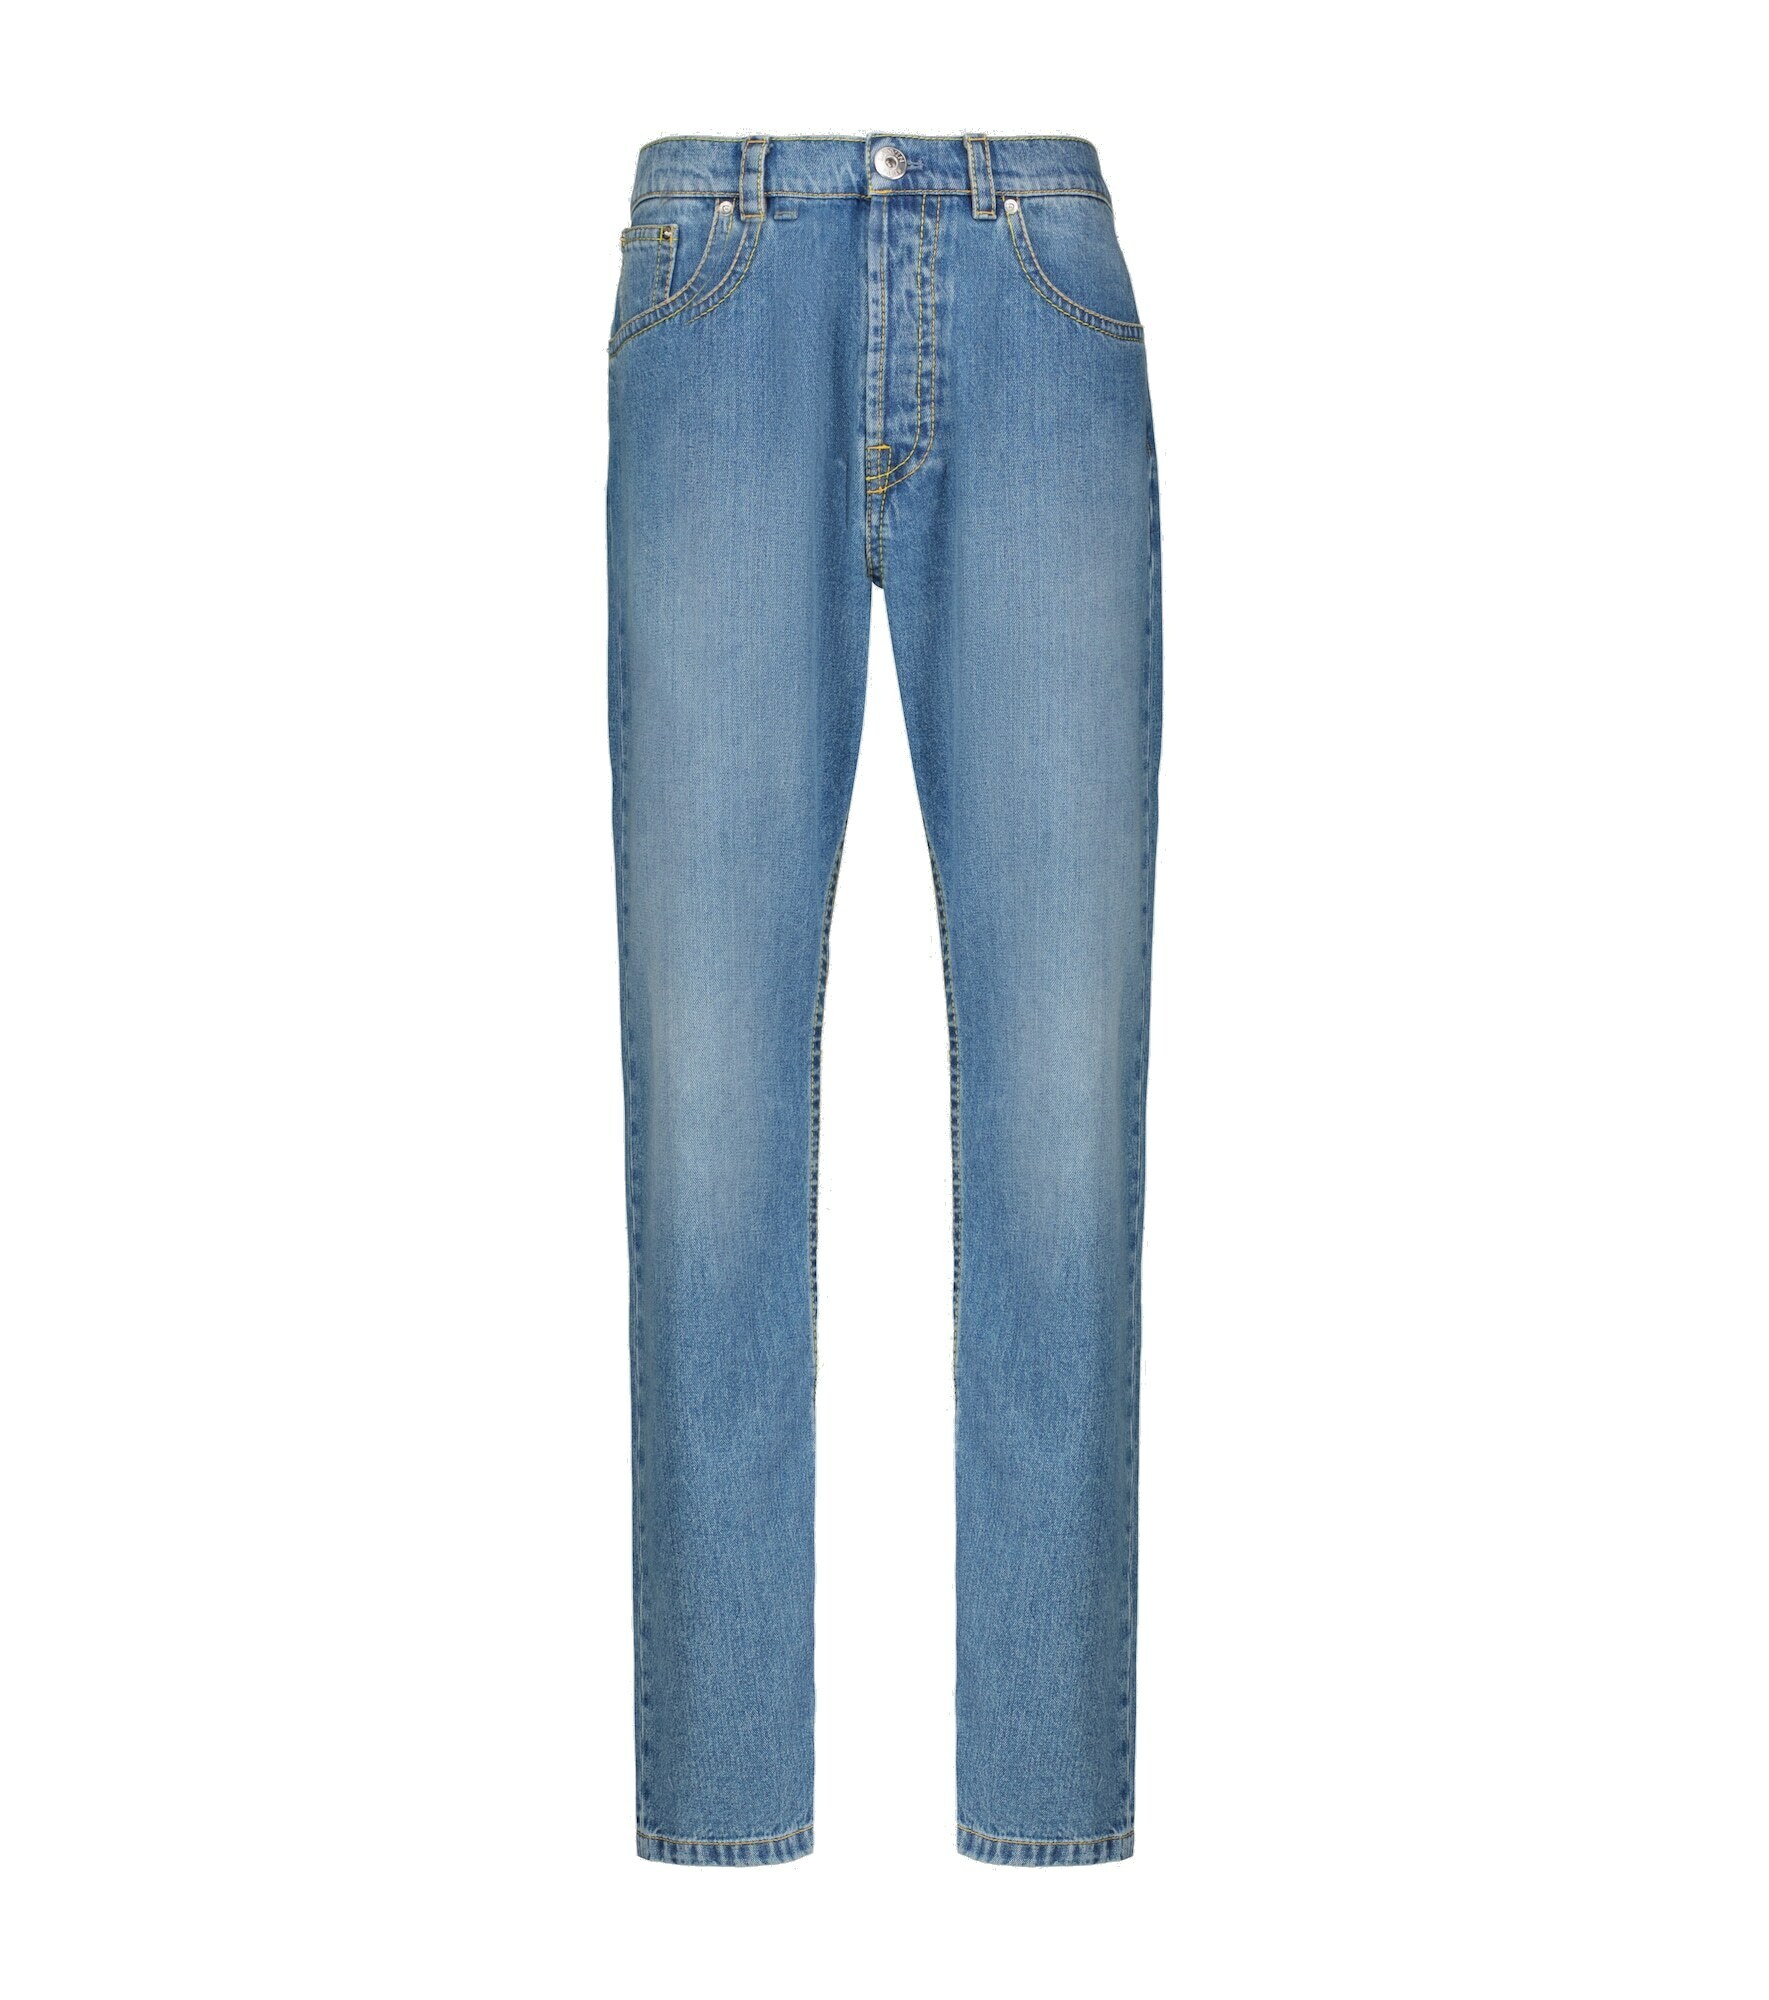 Lanvin - Straight-leg jeans Lanvin